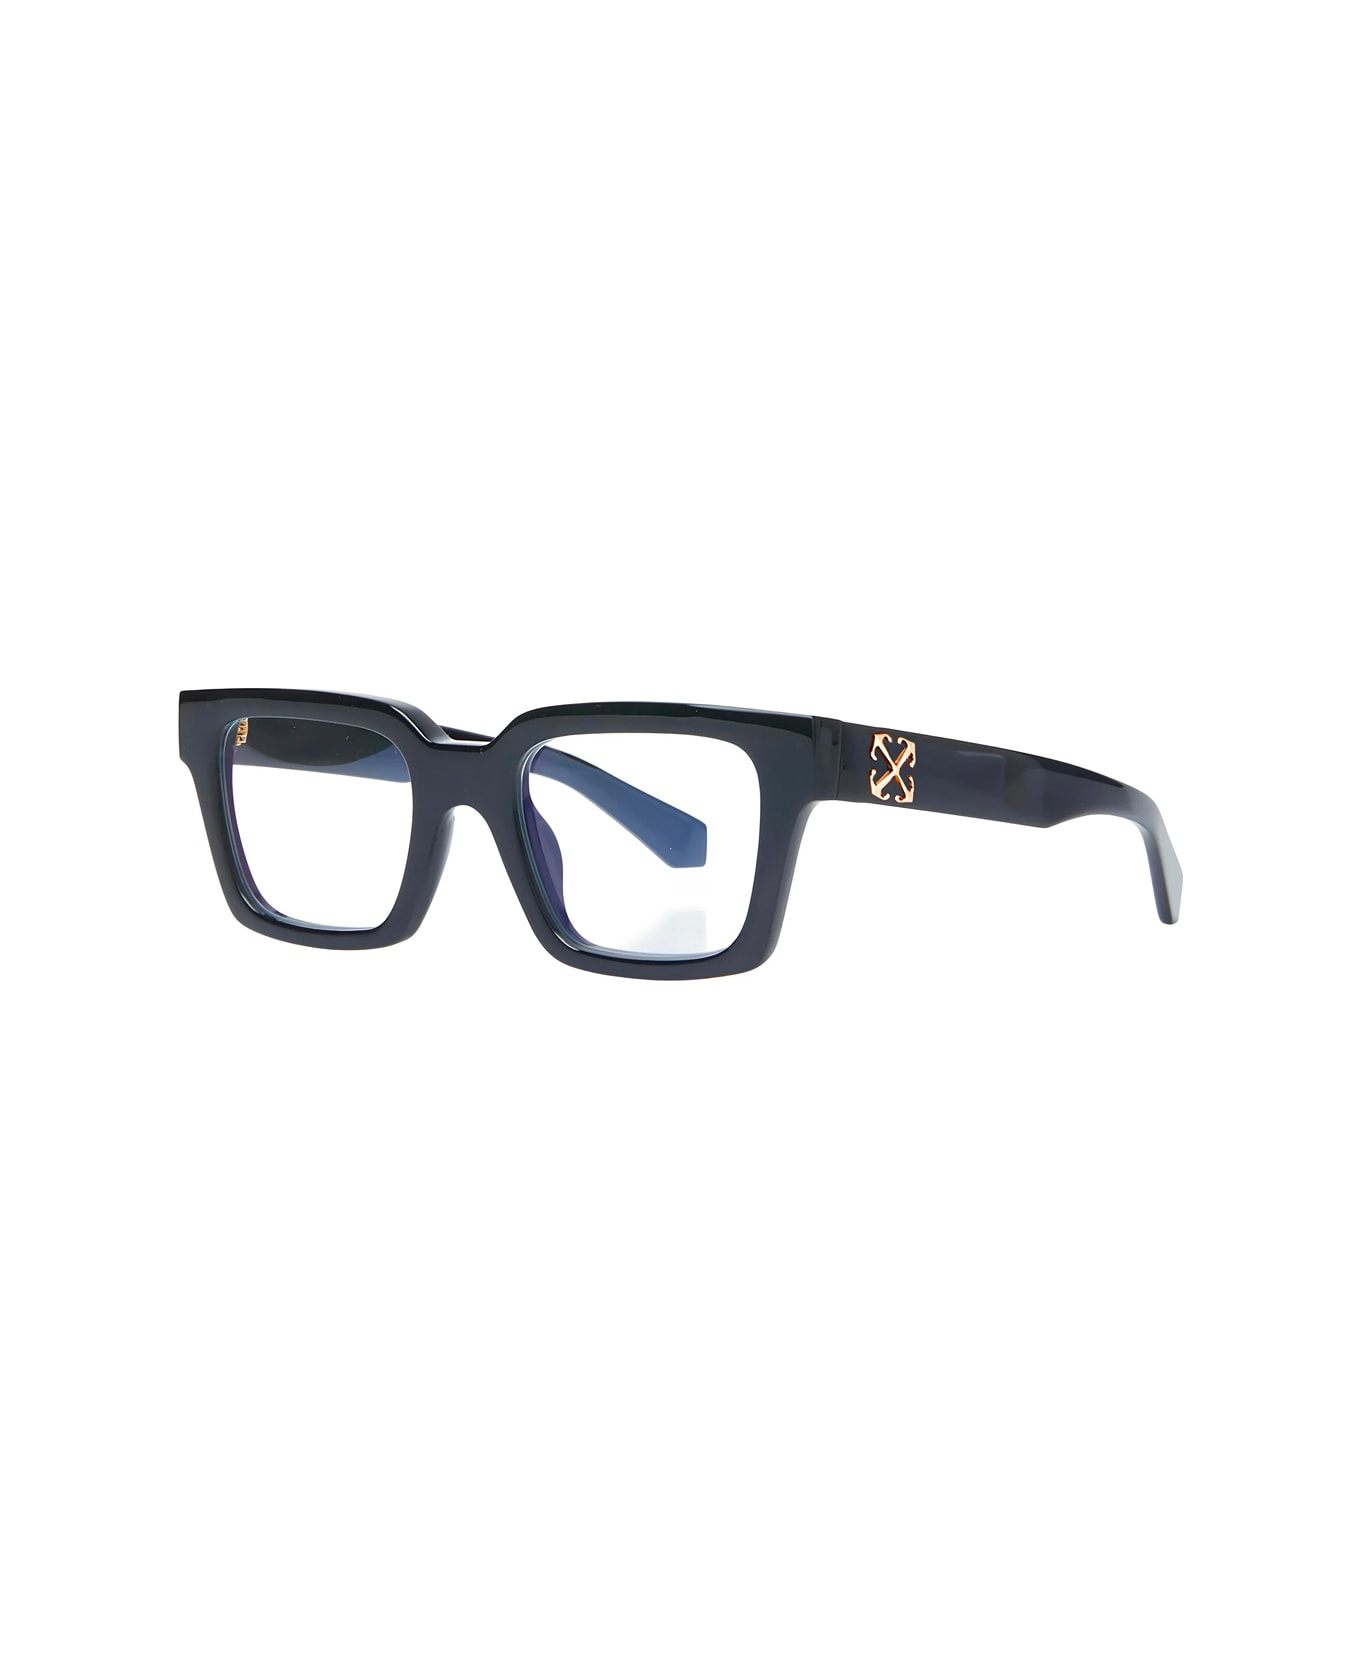 Off-White Off White Oerj072 Style 72 1000 Black Glasses - Nero アイウェア